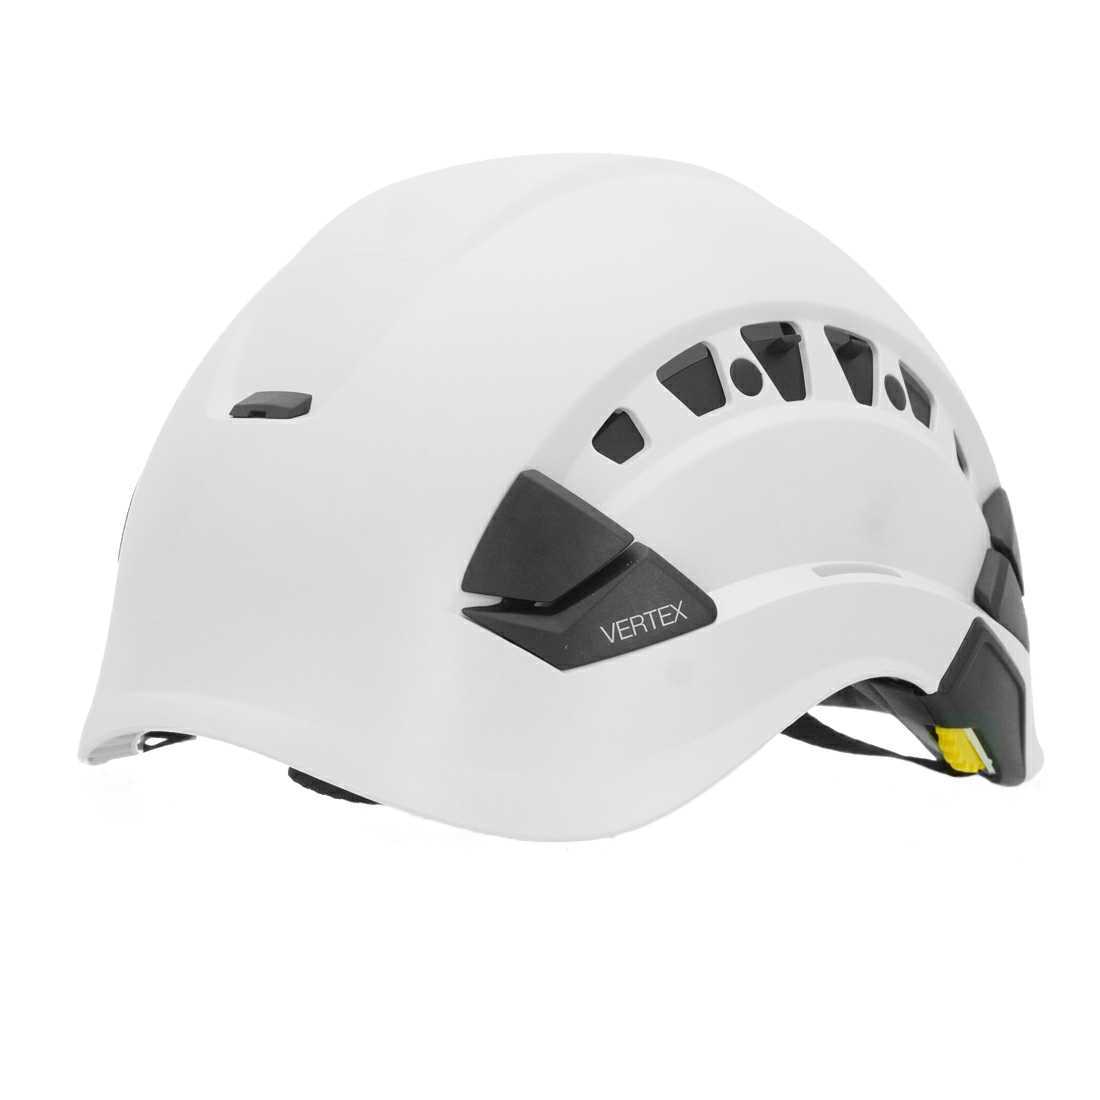 White Petzl Vertex Vent Helmet Rear Left Angle View